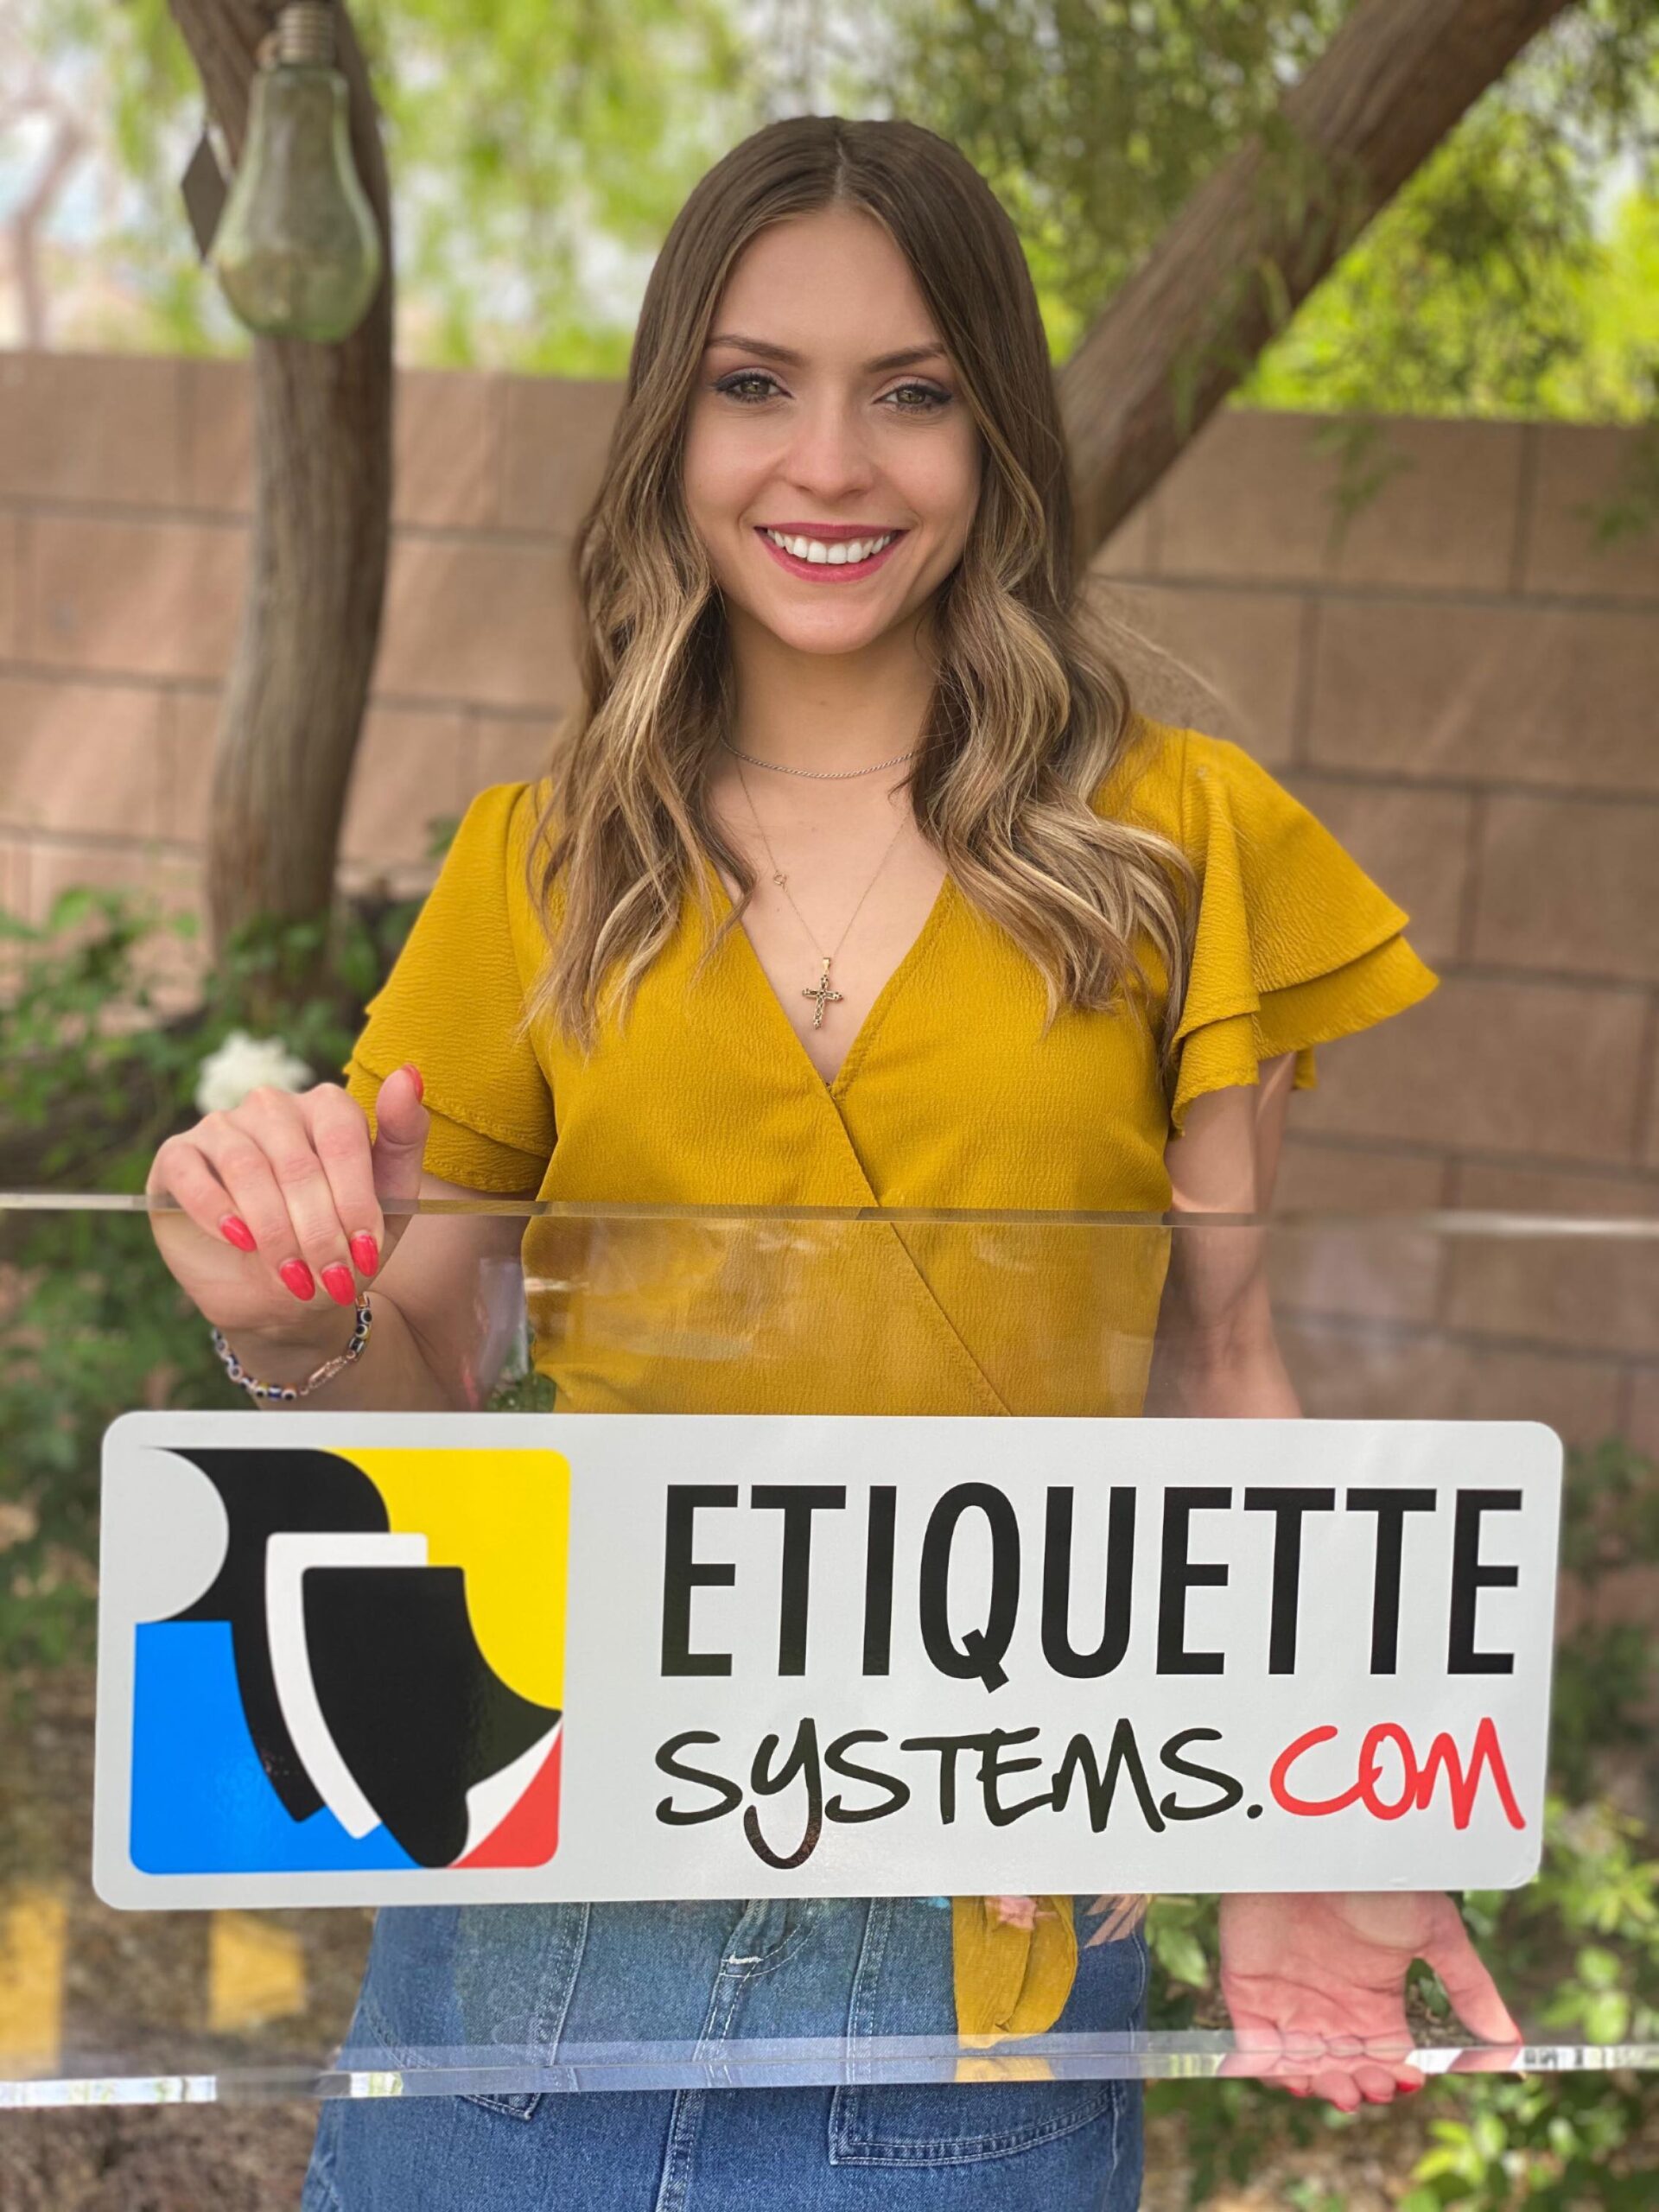 etiquettesystems.com